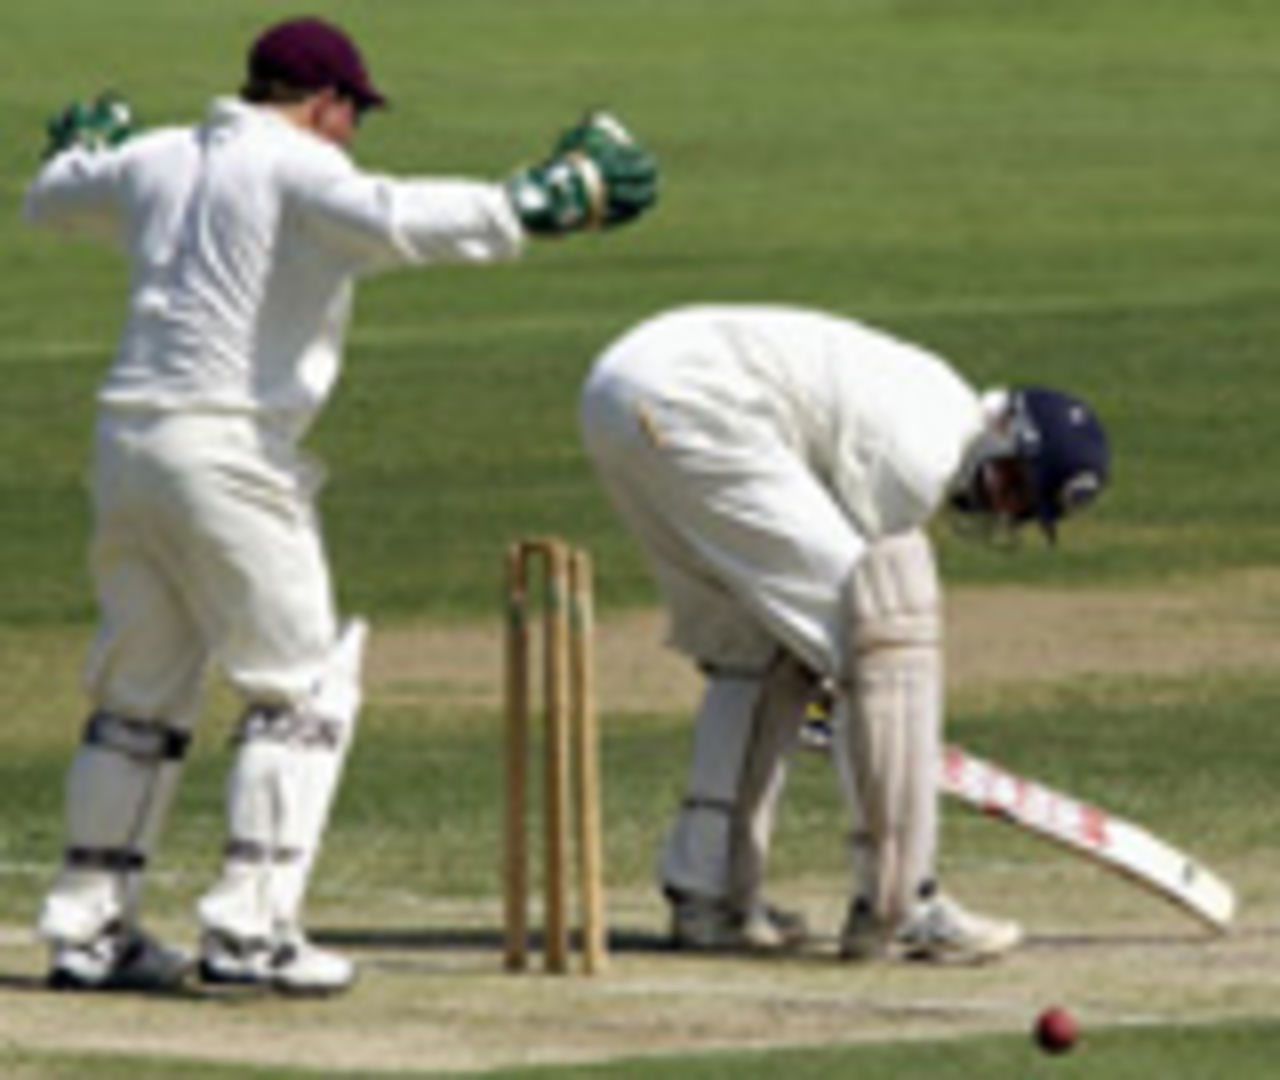 VVS Laxman is bowled by Chris Simpson, Queensland Academy of Sport v Indians, Allan Border Field, Brisbane, November 30, 2003